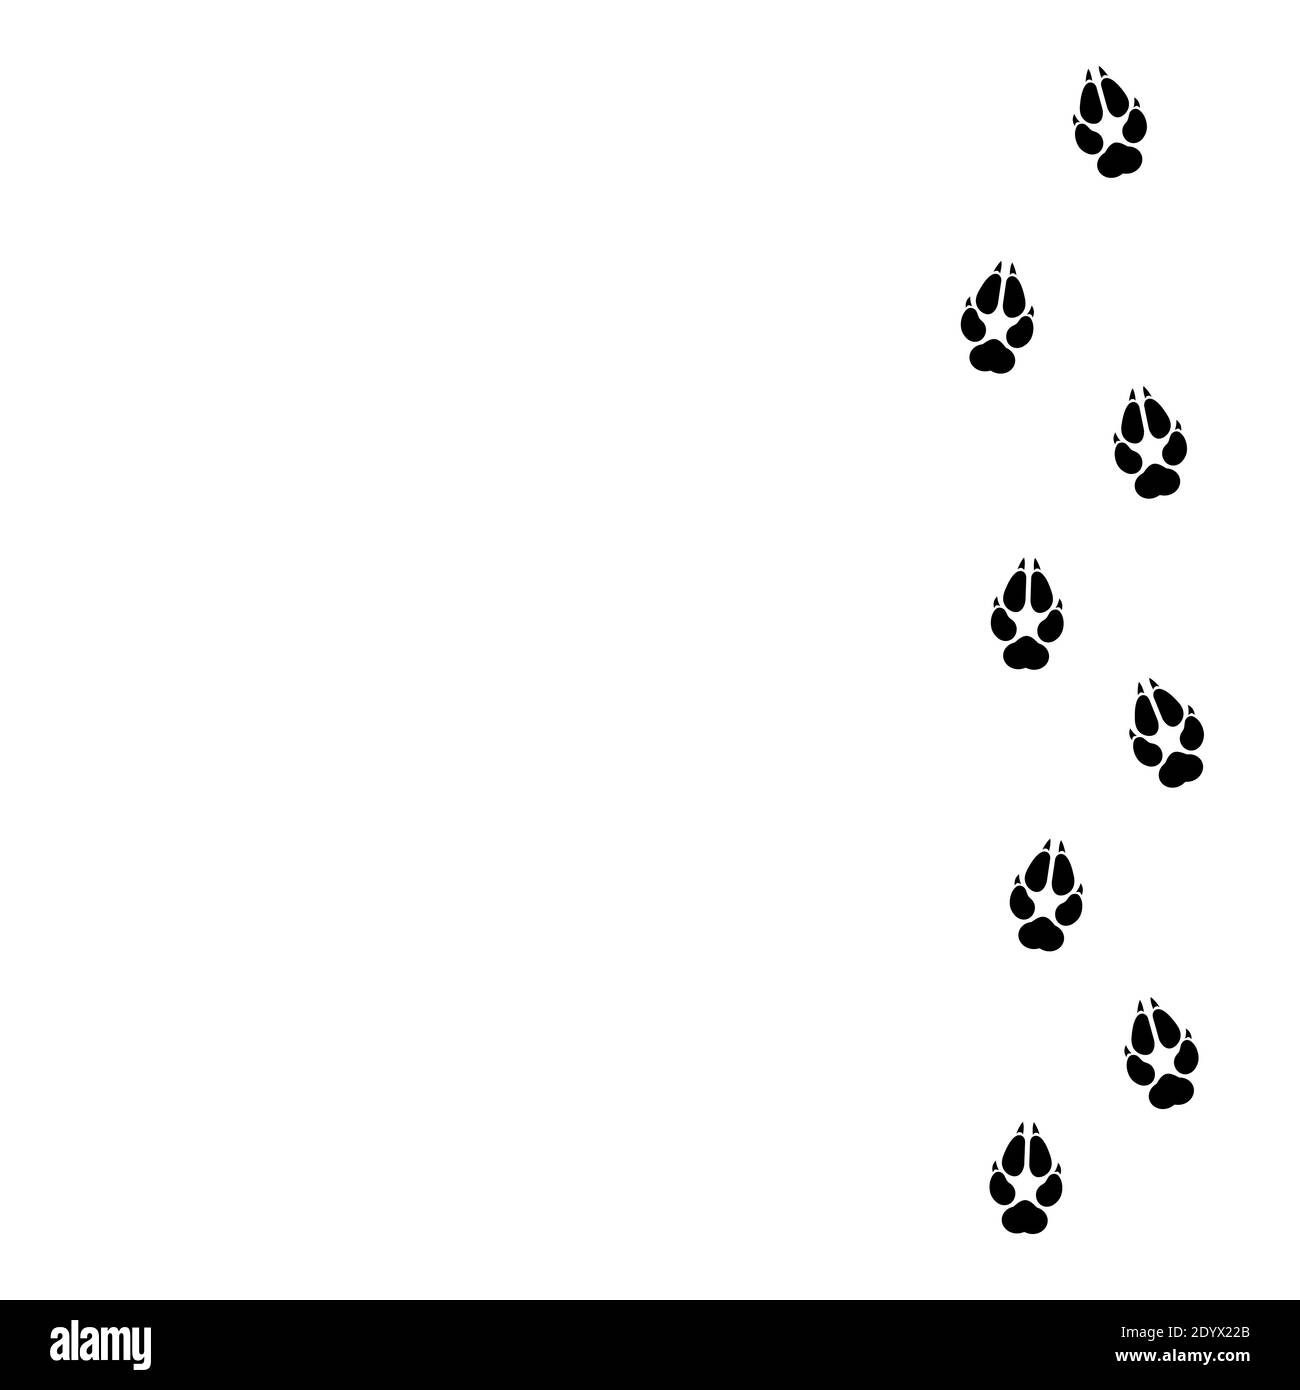 wolf footprint clipart border